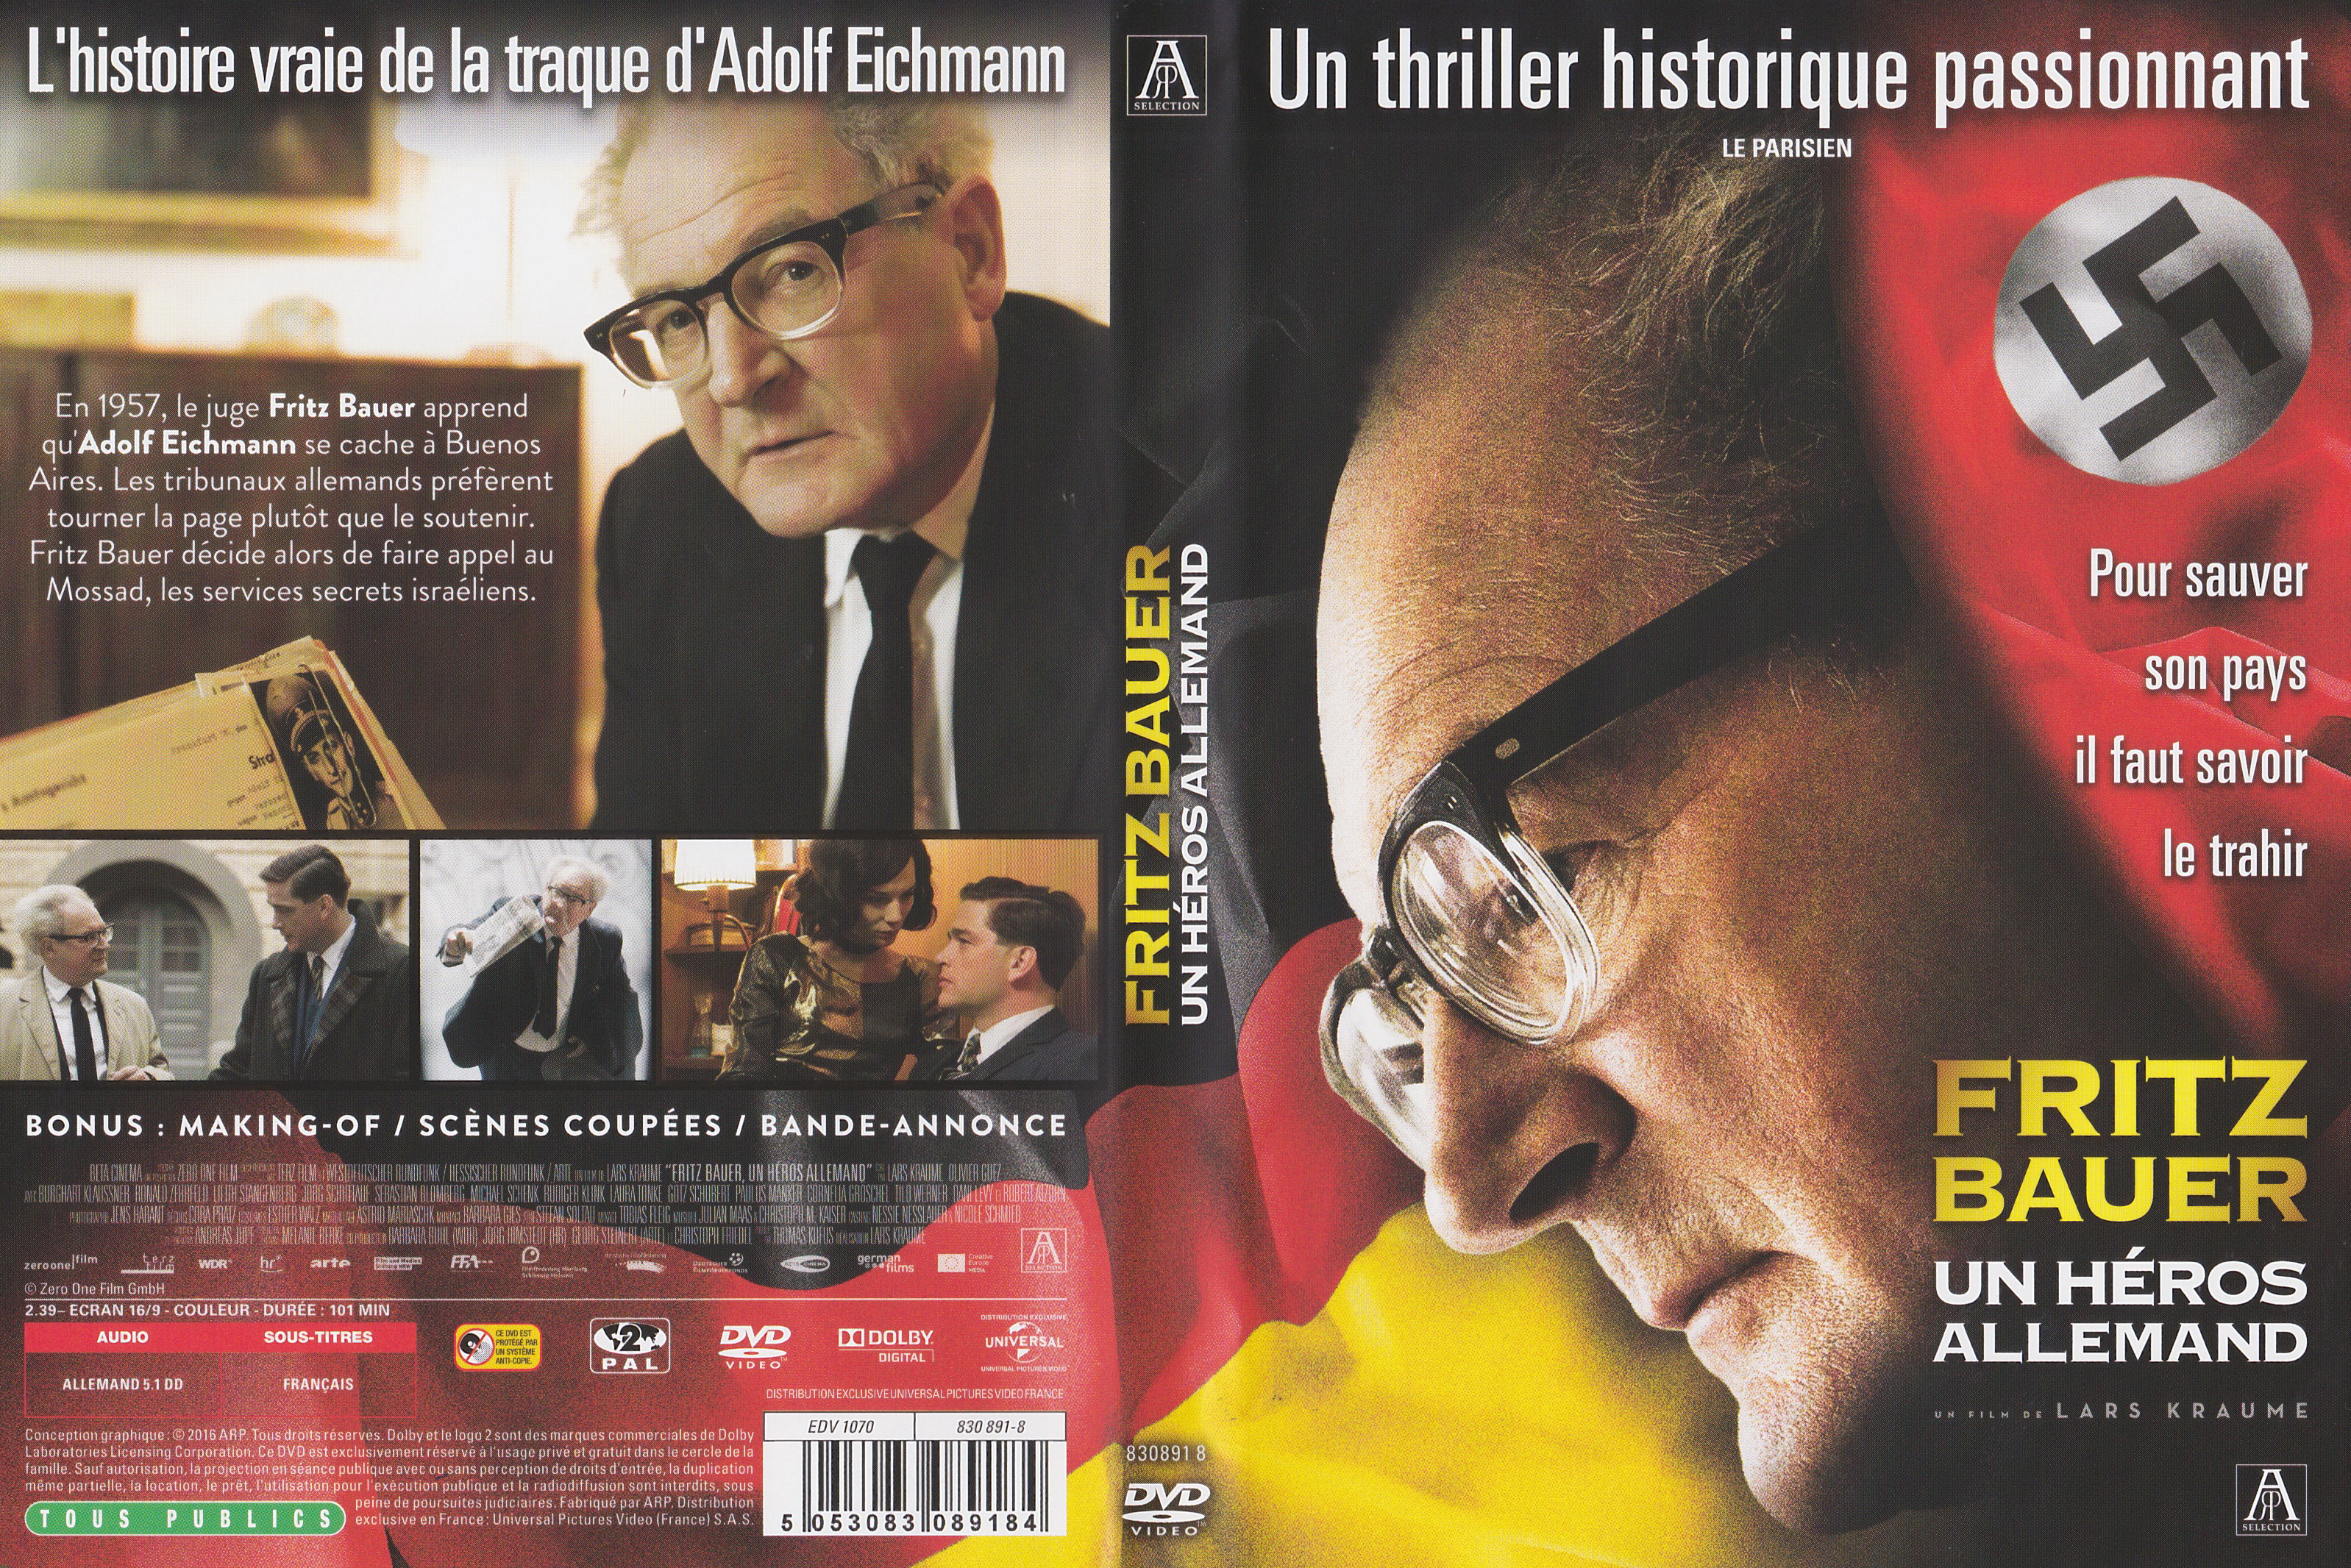 Jaquette DVD Fritz Bauer un hros allemand